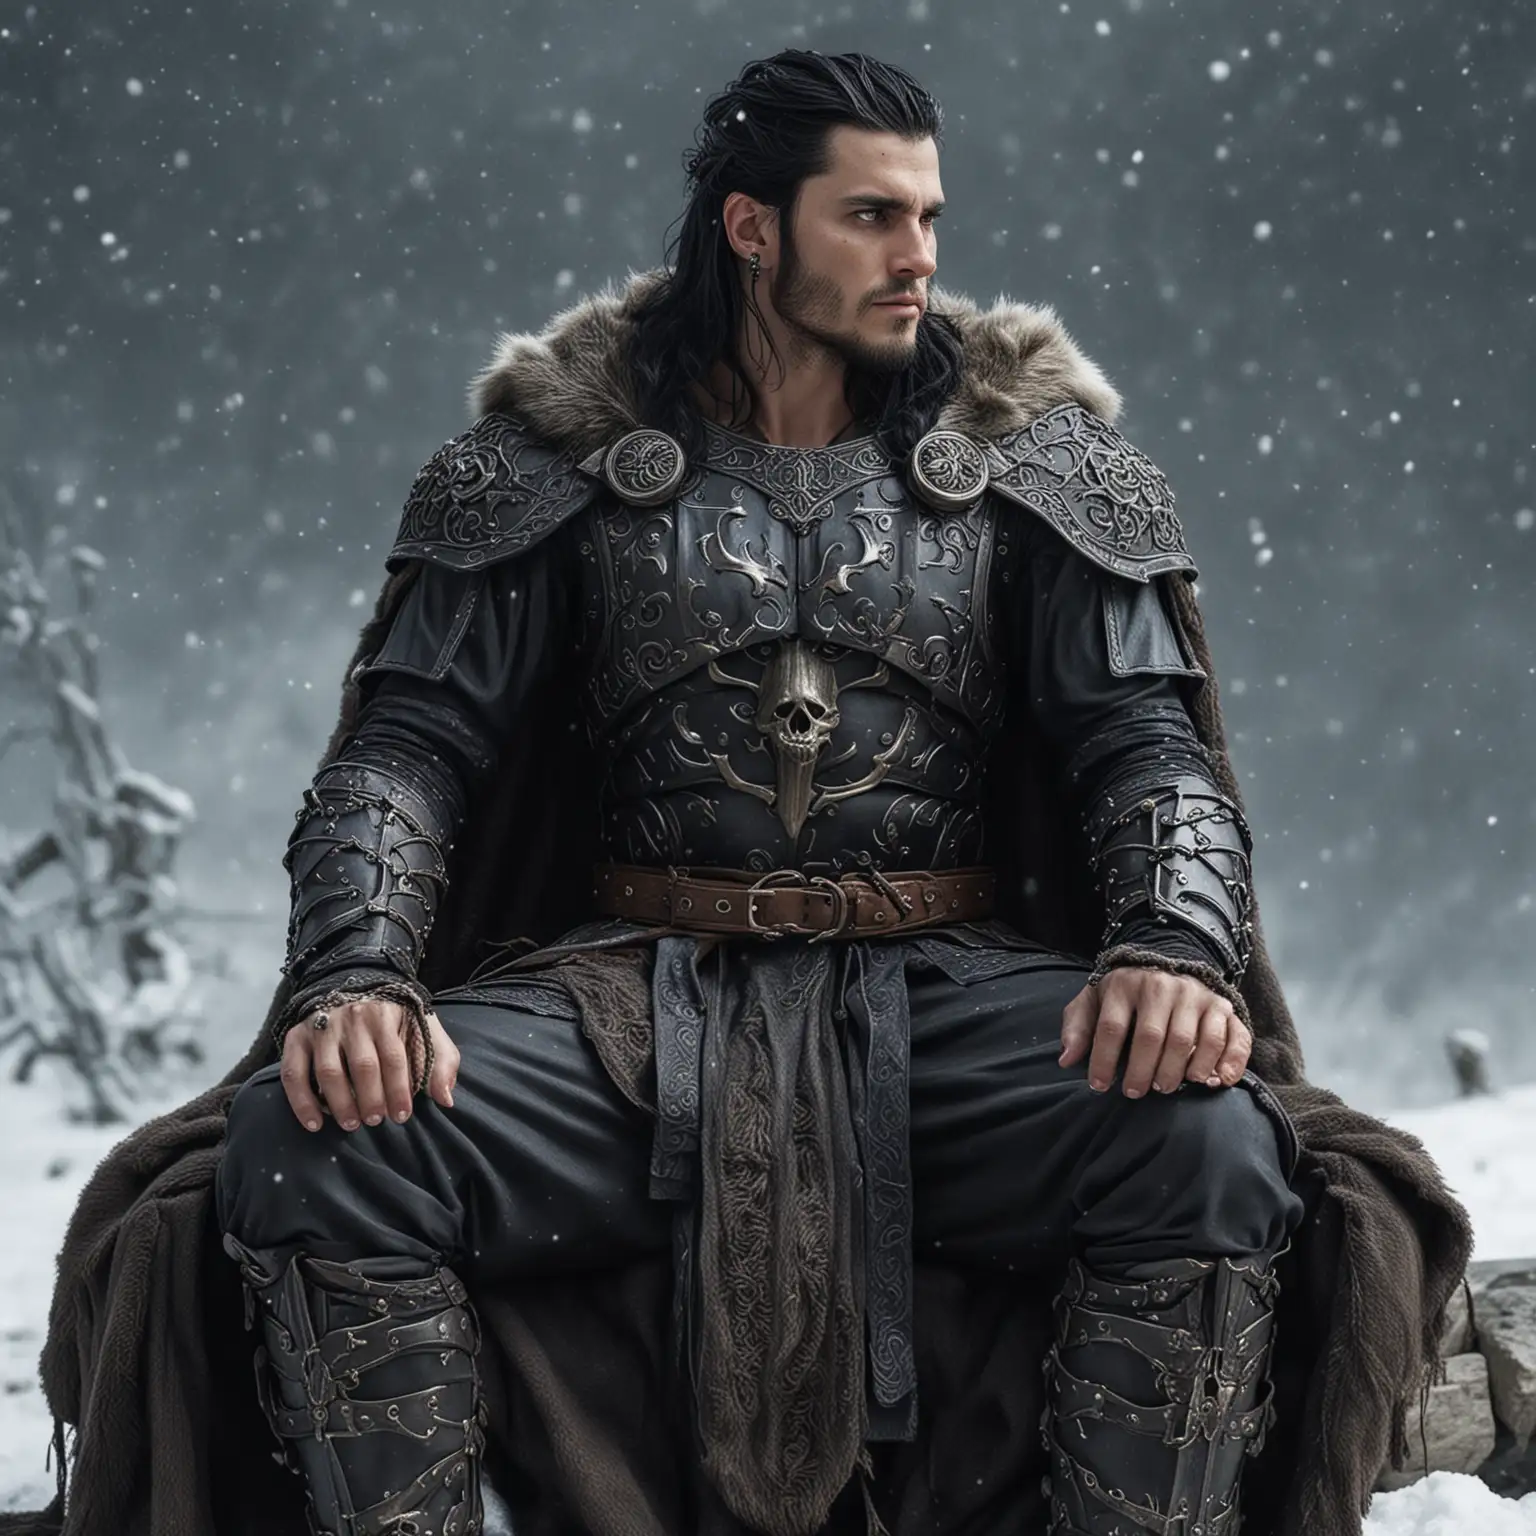 Handsome-Viking-Warrior-in-Snowy-Landscape-with-Skeleton-Robe-Armor